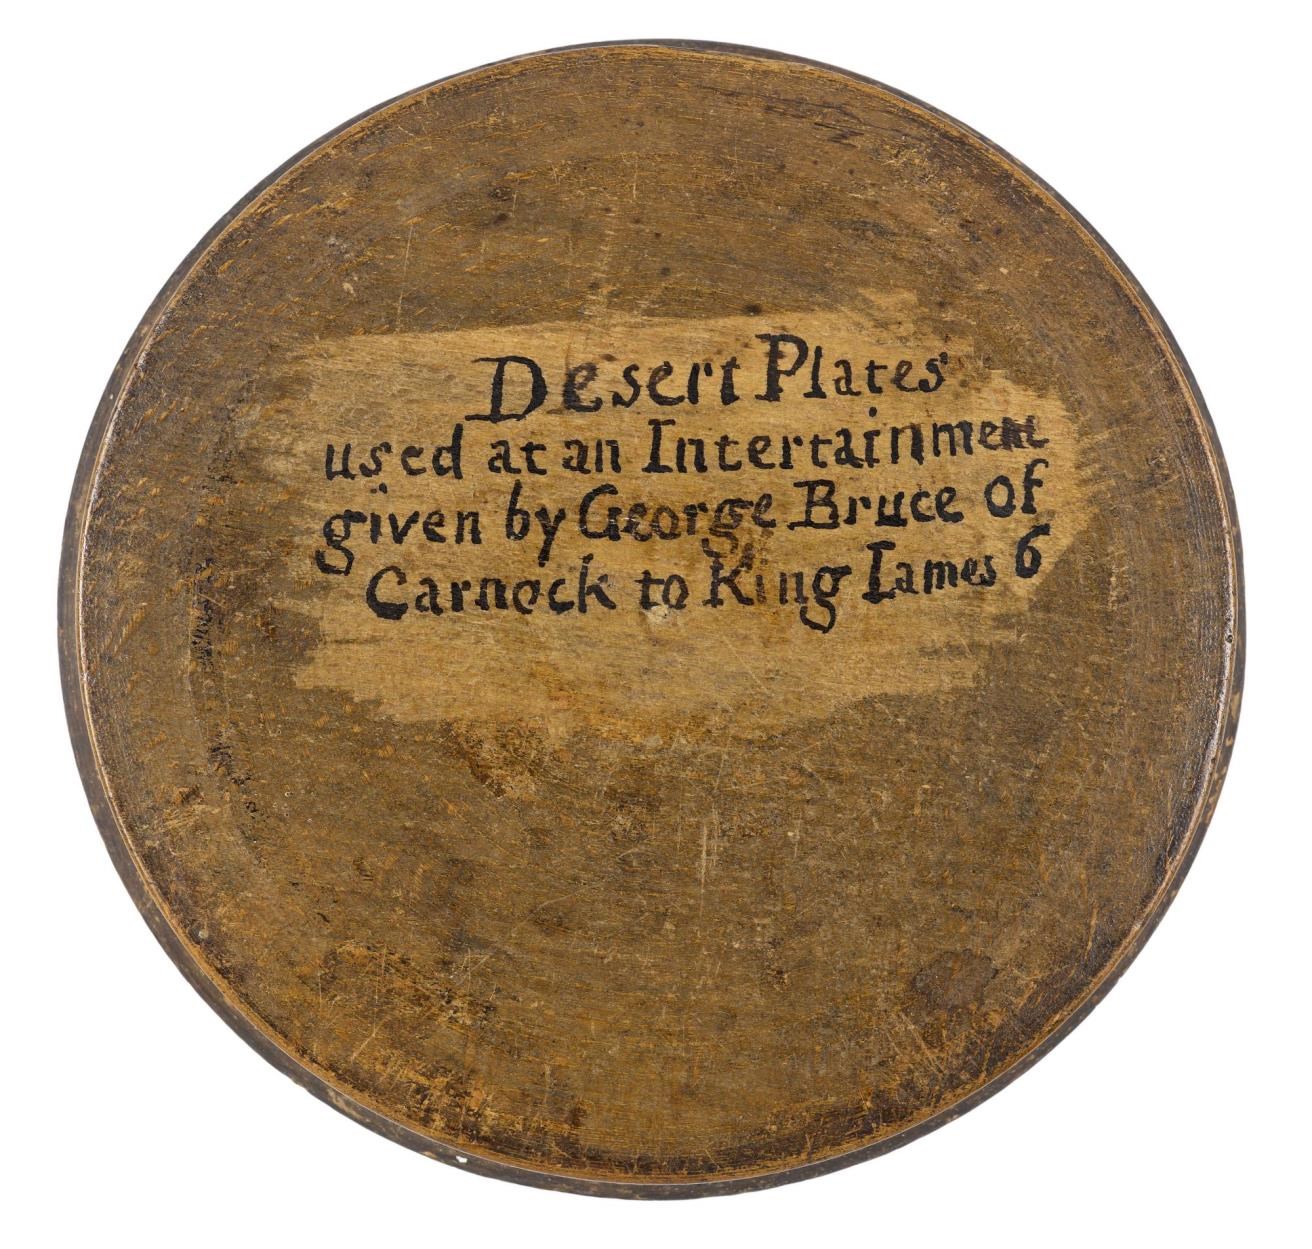 Beechwood box containing desert plates